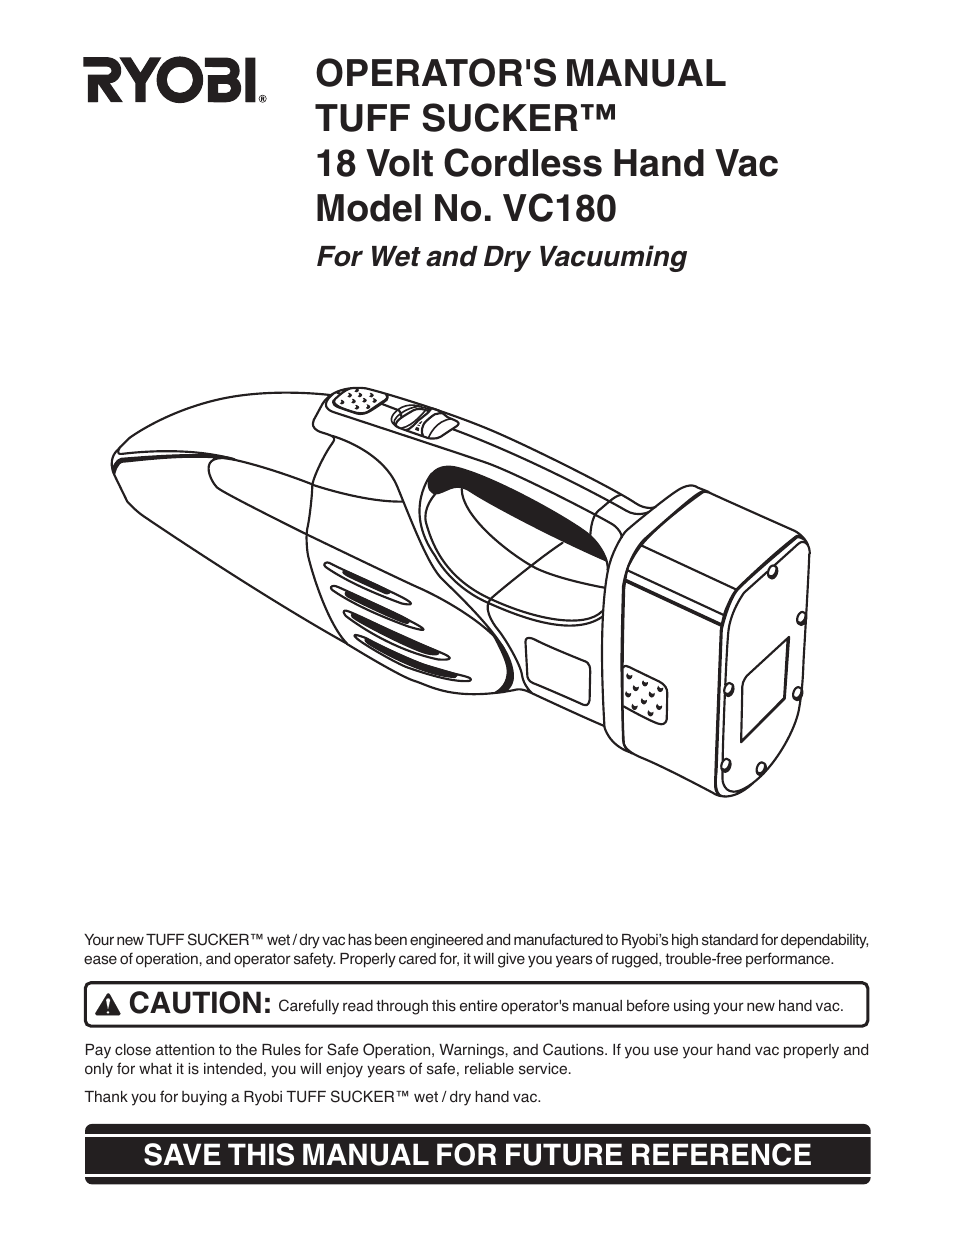 Ryobi VC180 User Manual | 12 pages | Original mode